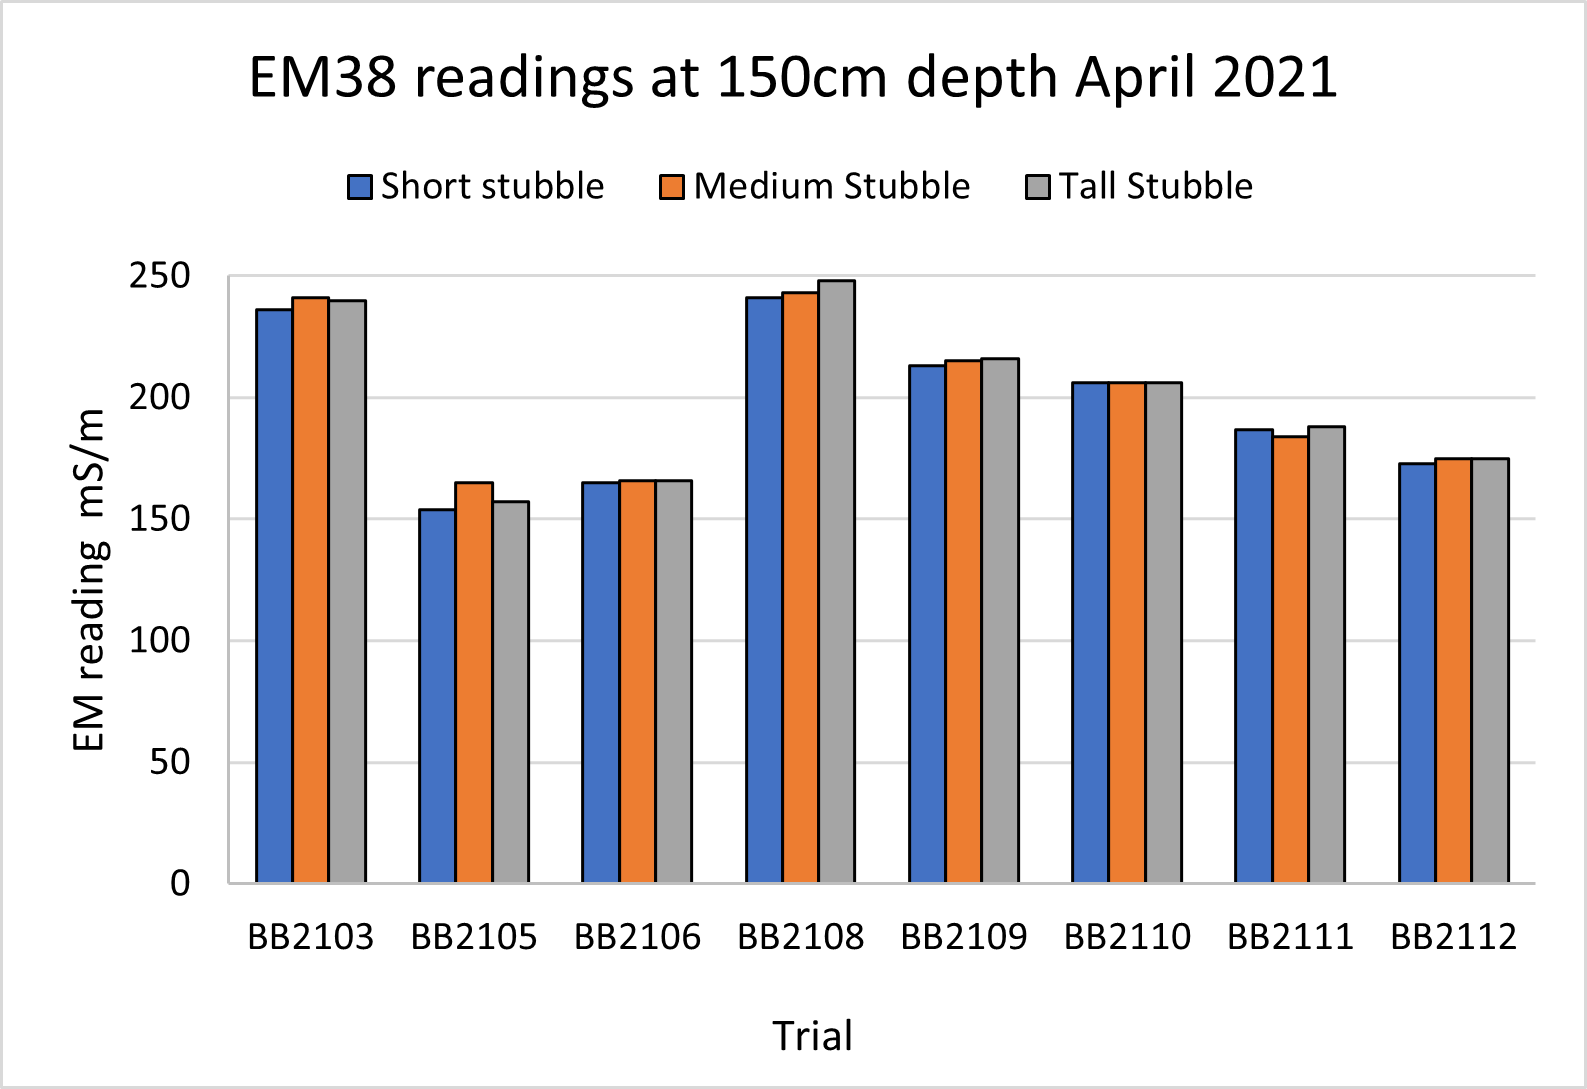 Column graph of EM38 readings at 150cm depth at end of summer fallow across 9 trials (April 2021).